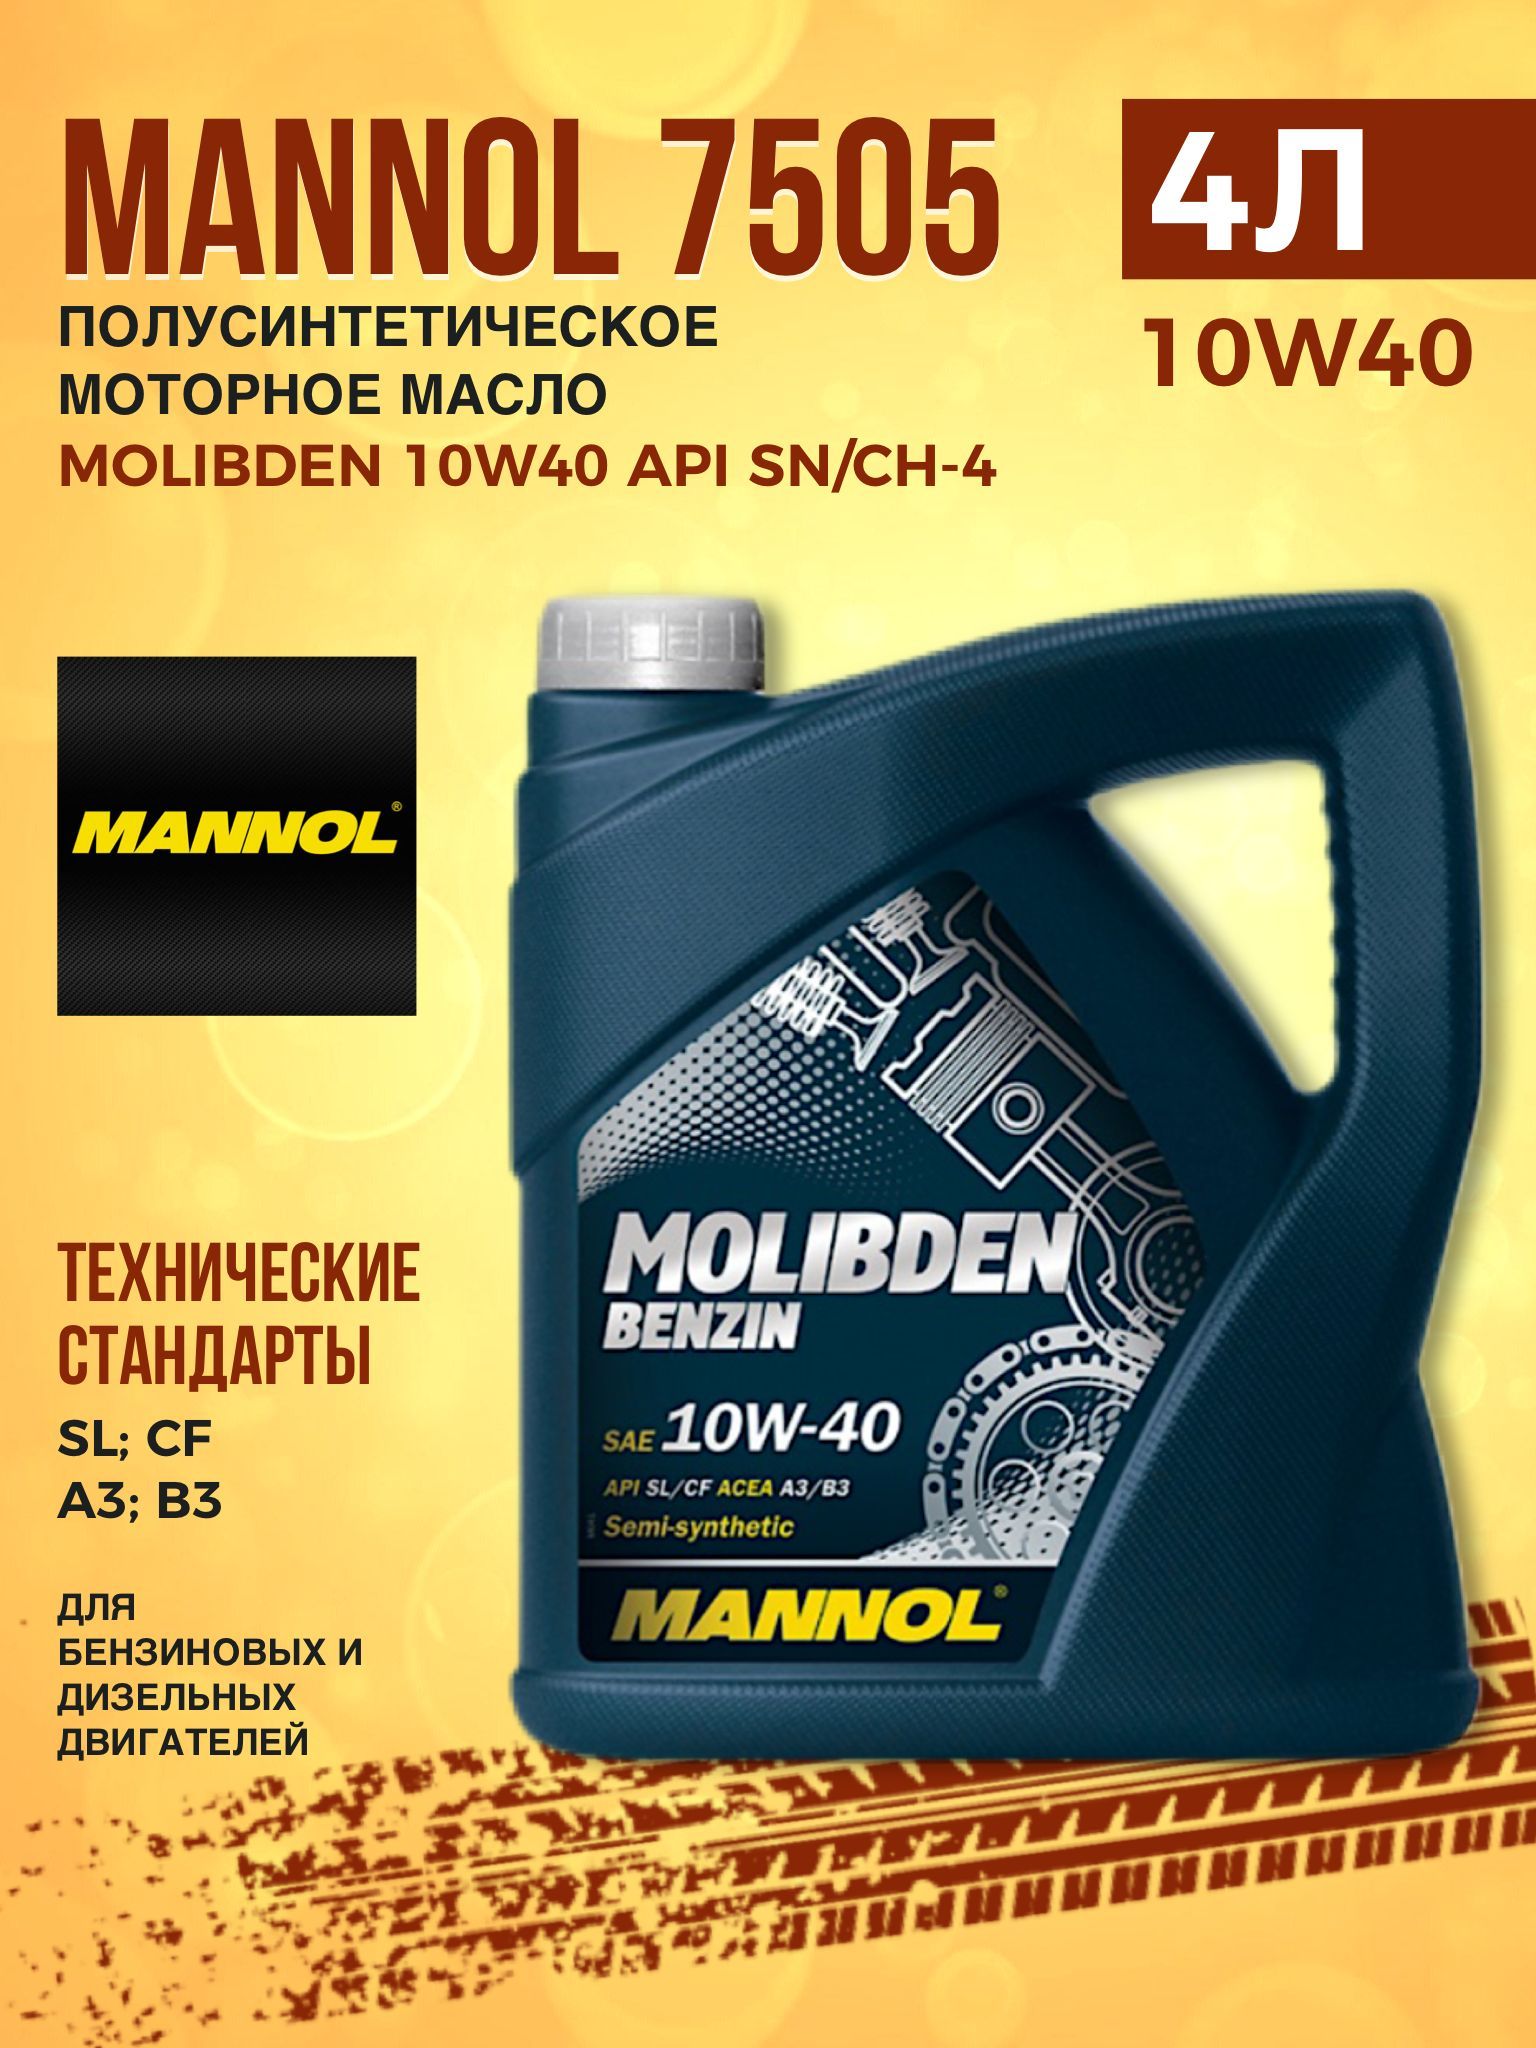 Масло манол 10w 40 отзывы. Масло моторное 10w40 п/синт. Molibden API SN/Ch-4 (4л) (Mannol). Маннол молибден 10-40. Манол молибден 10w 40. Манол 7505.